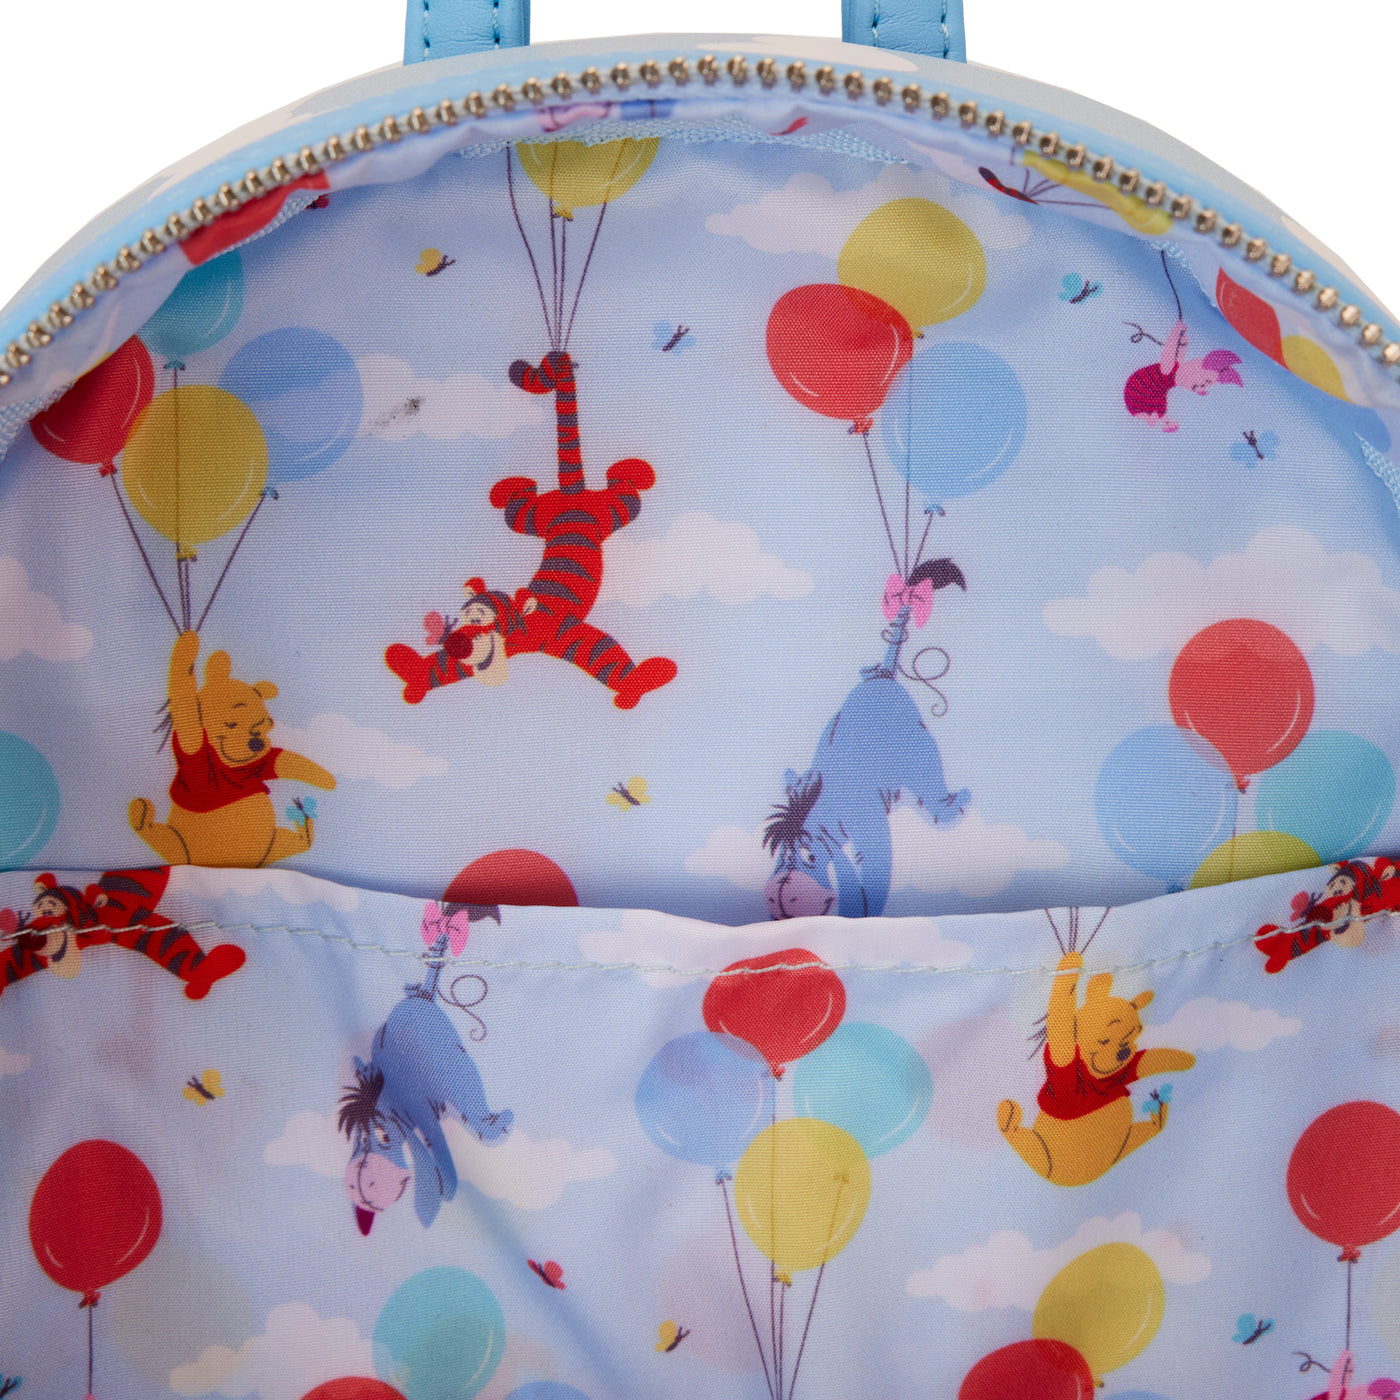 Disney Winnie the Pooh Balloons Mini Backpack